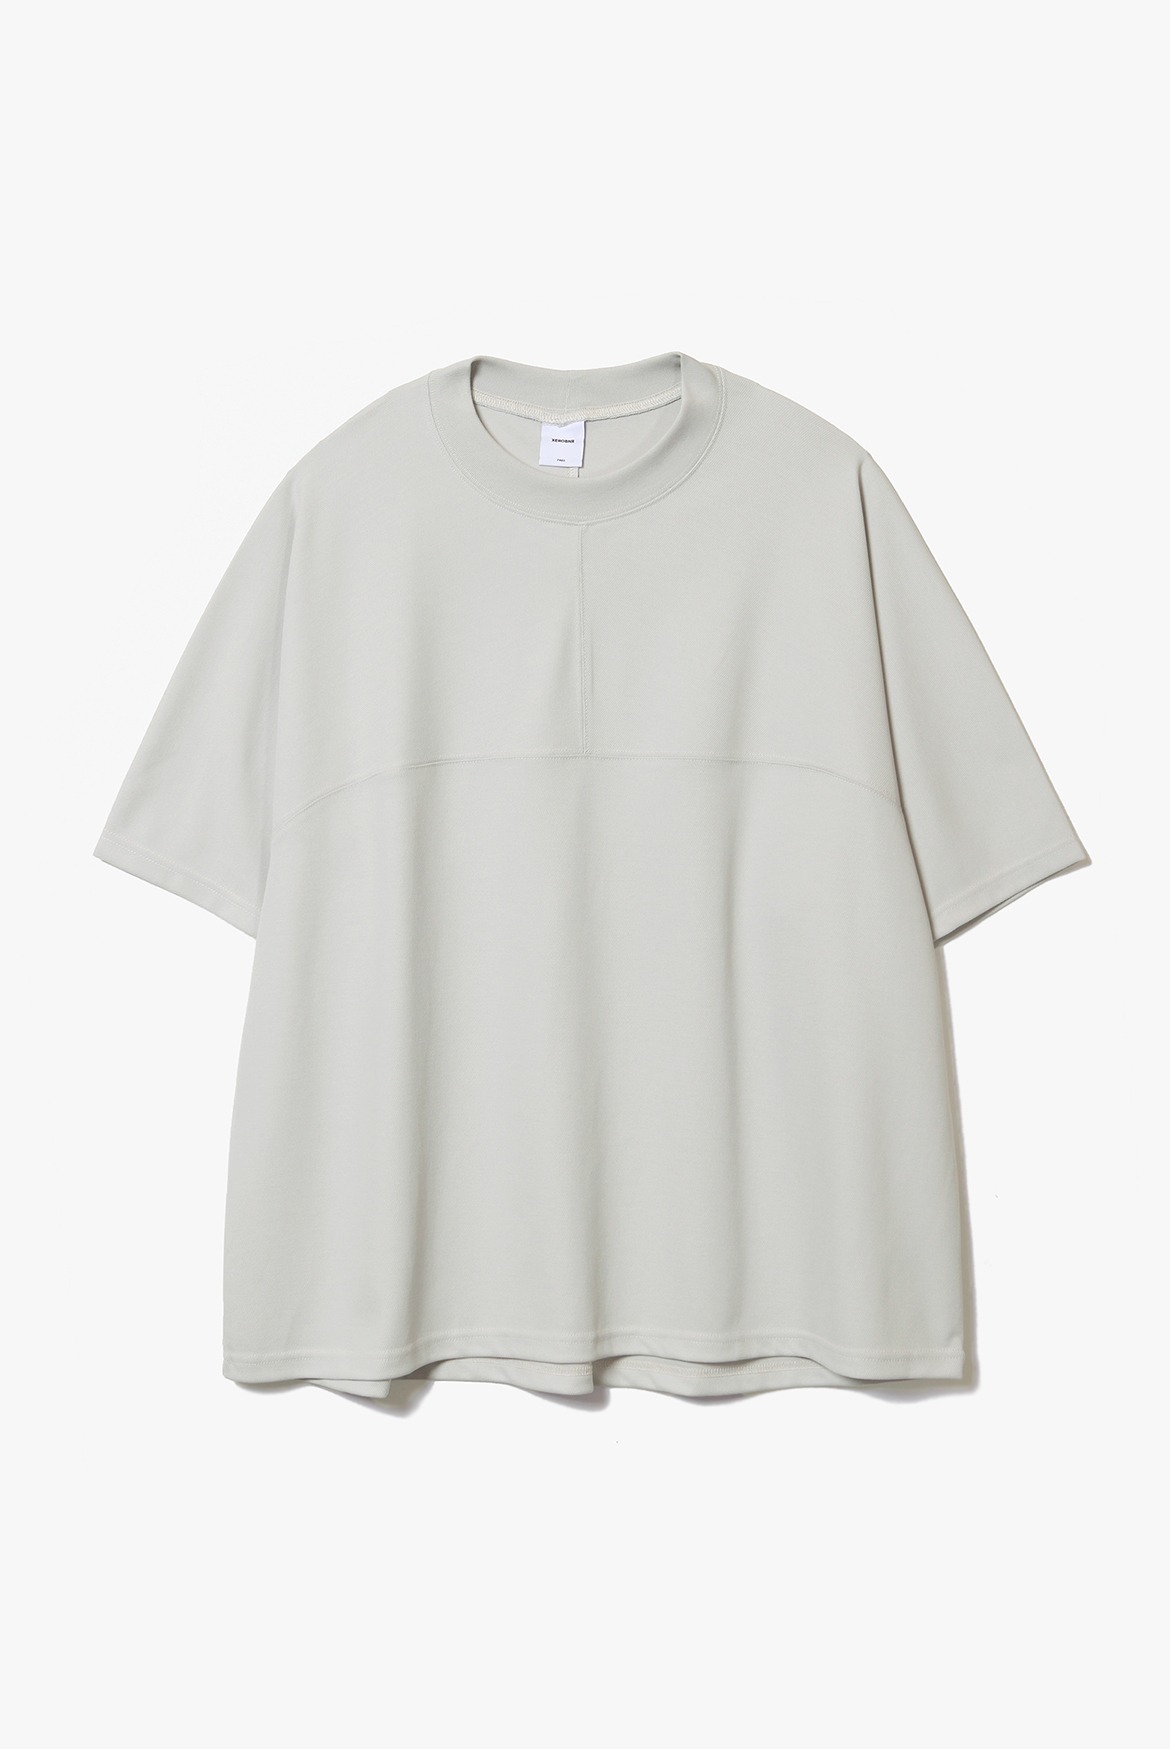 Dolman Sleeve T-Shirts [Grey]